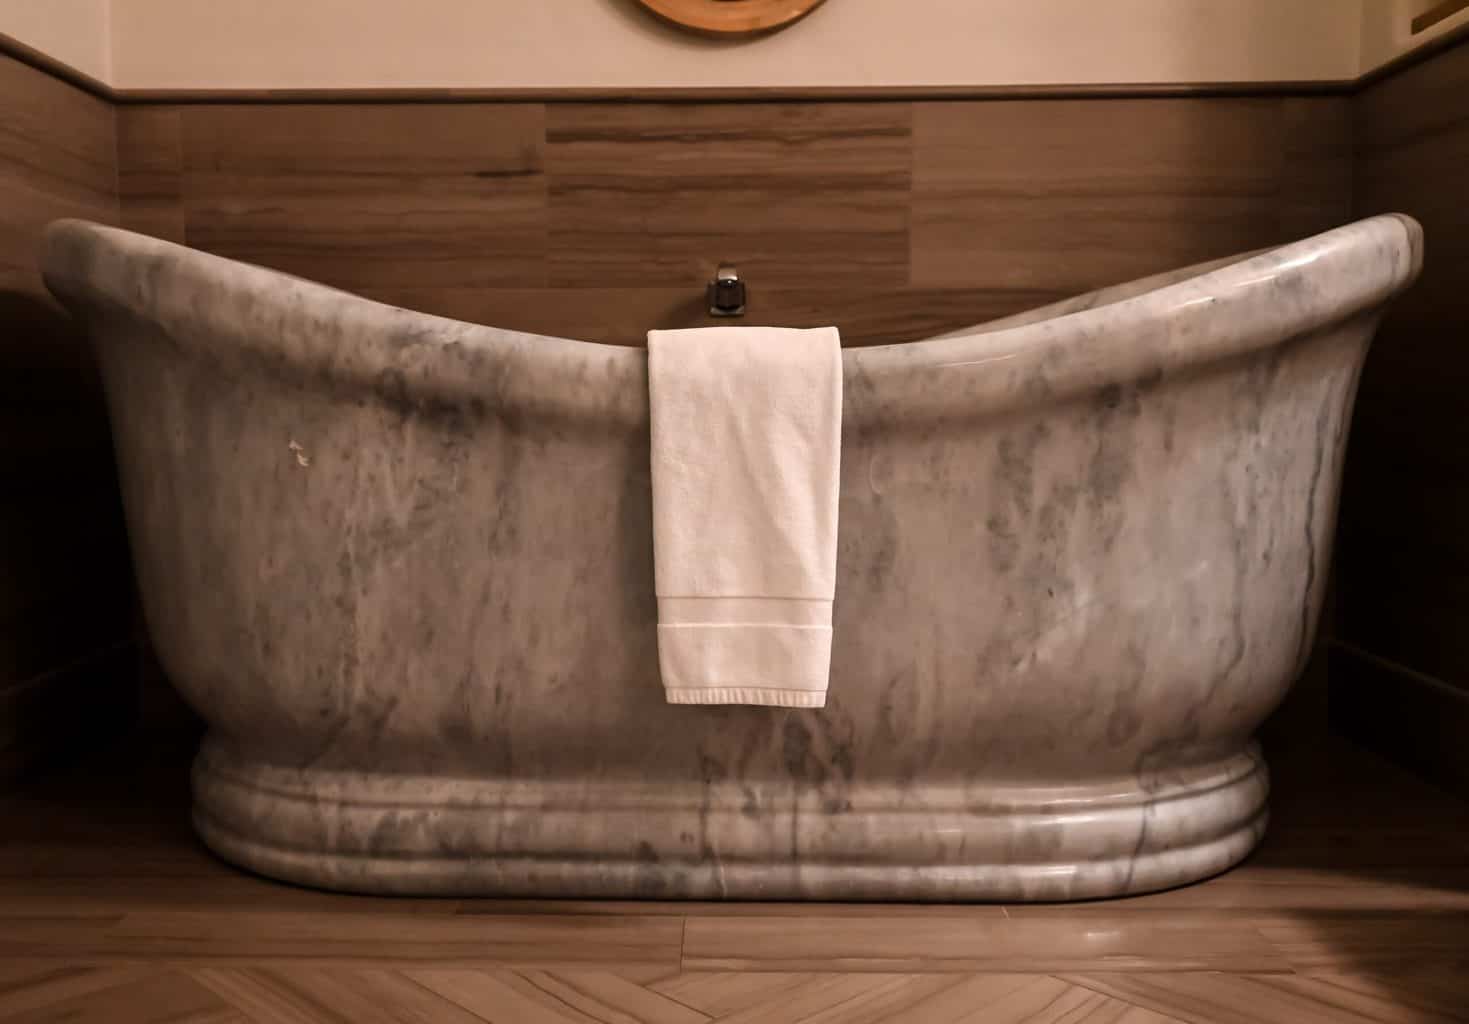 Gray bathtub with towel